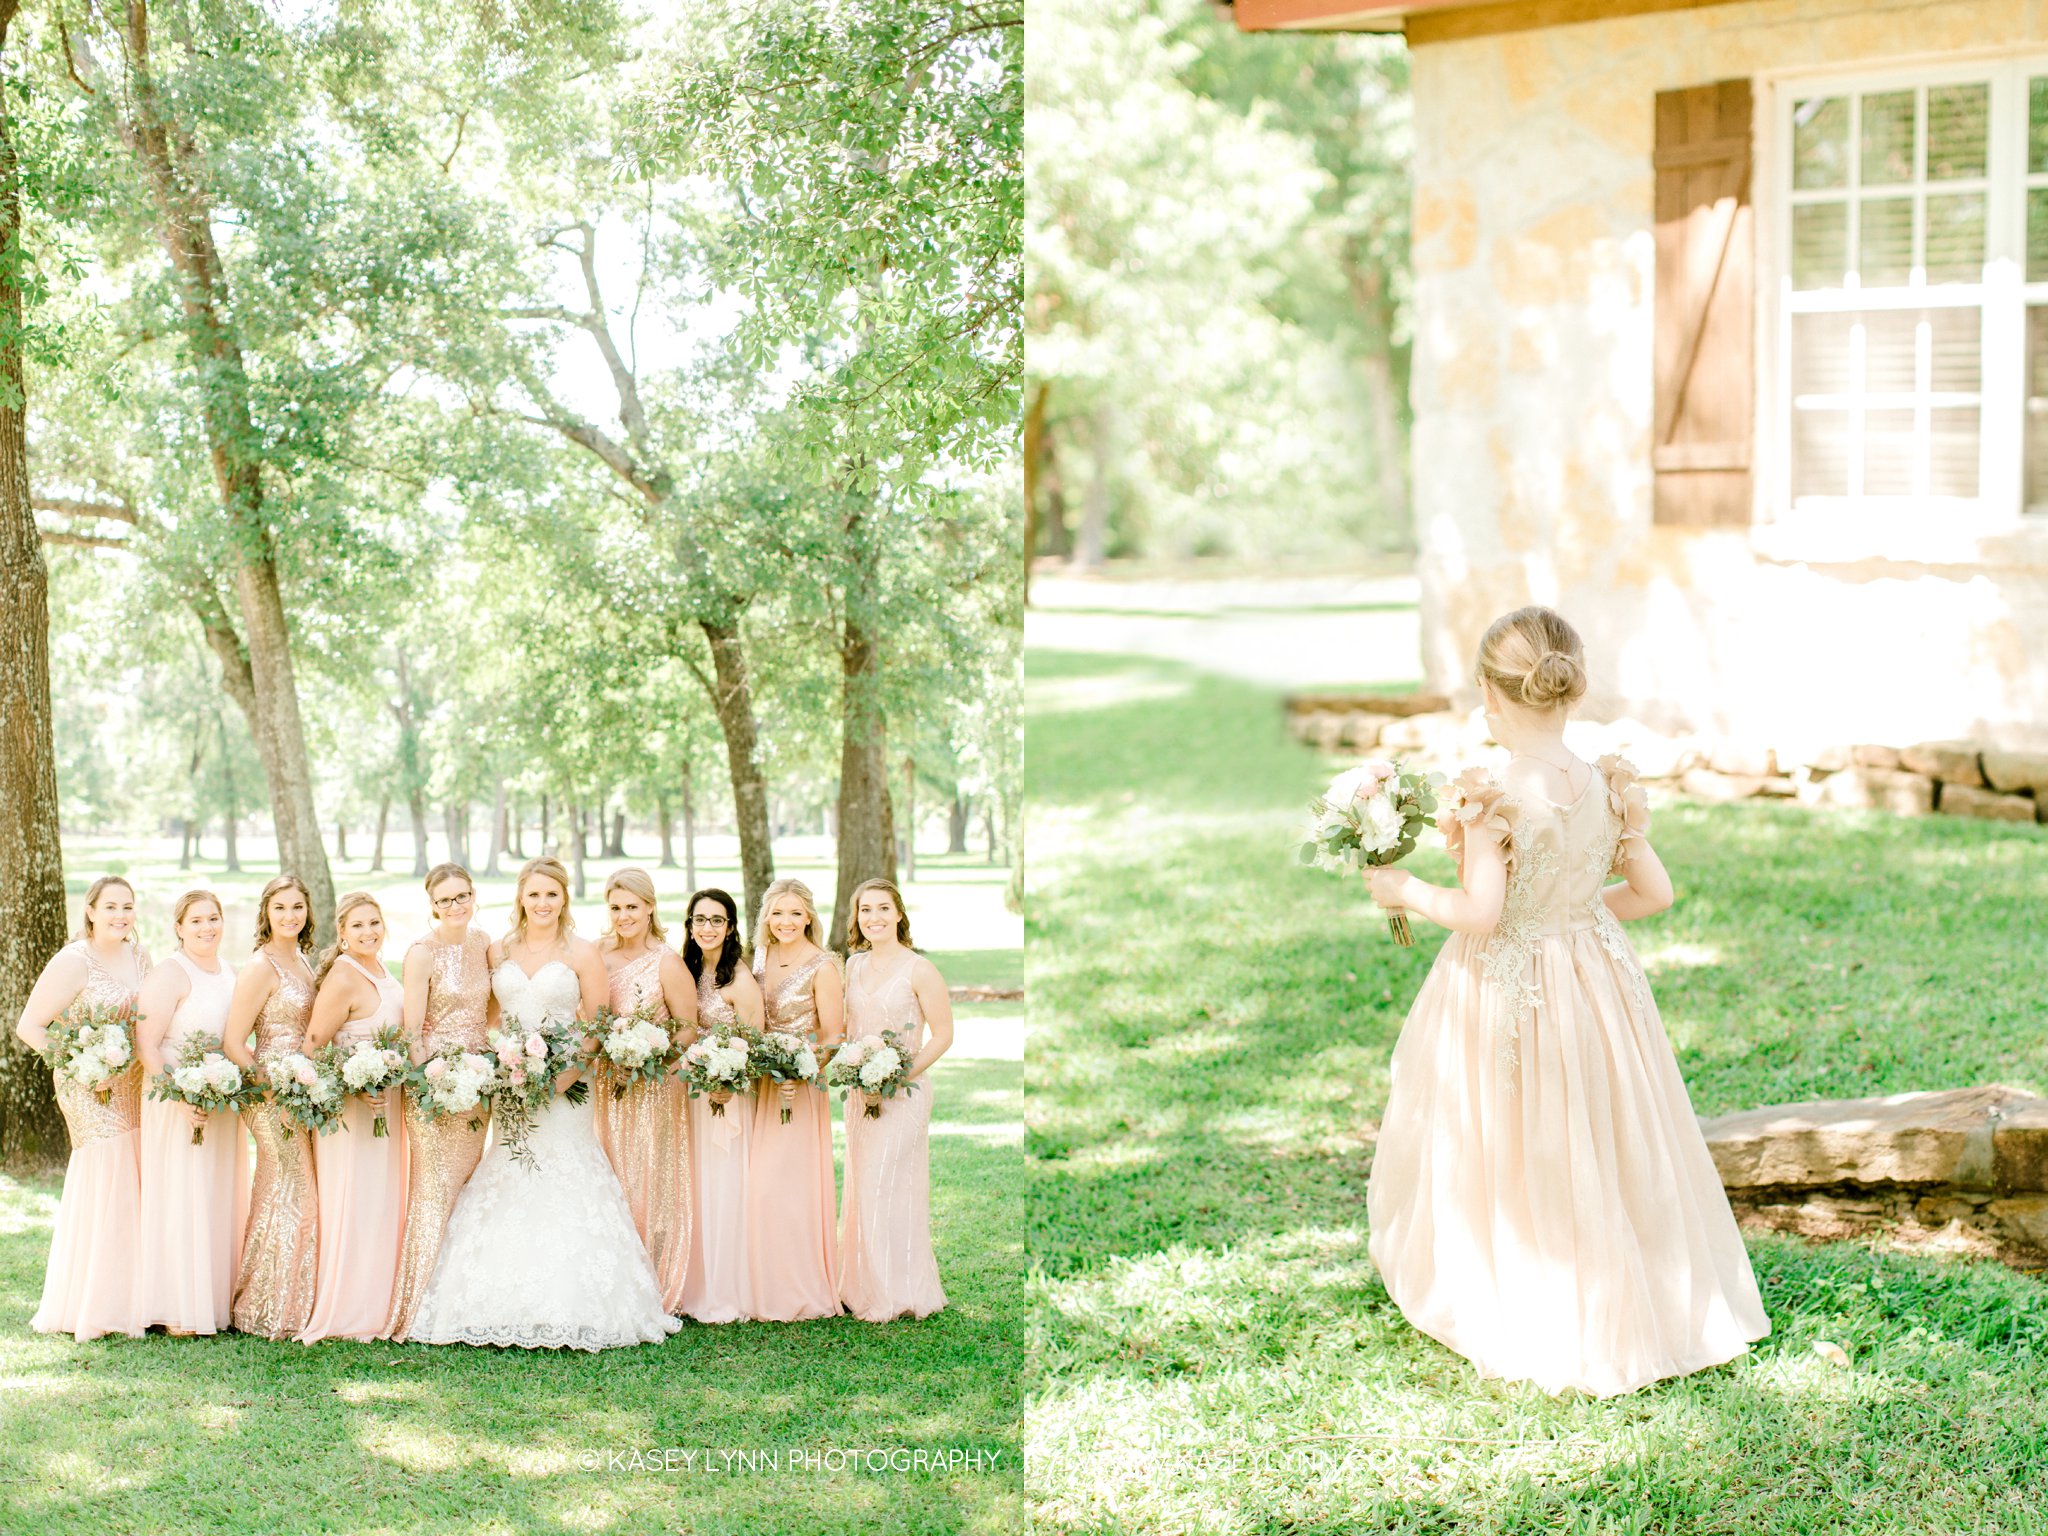 Balmorhea Events Wedding Photographer / Kasey Lynn Photography